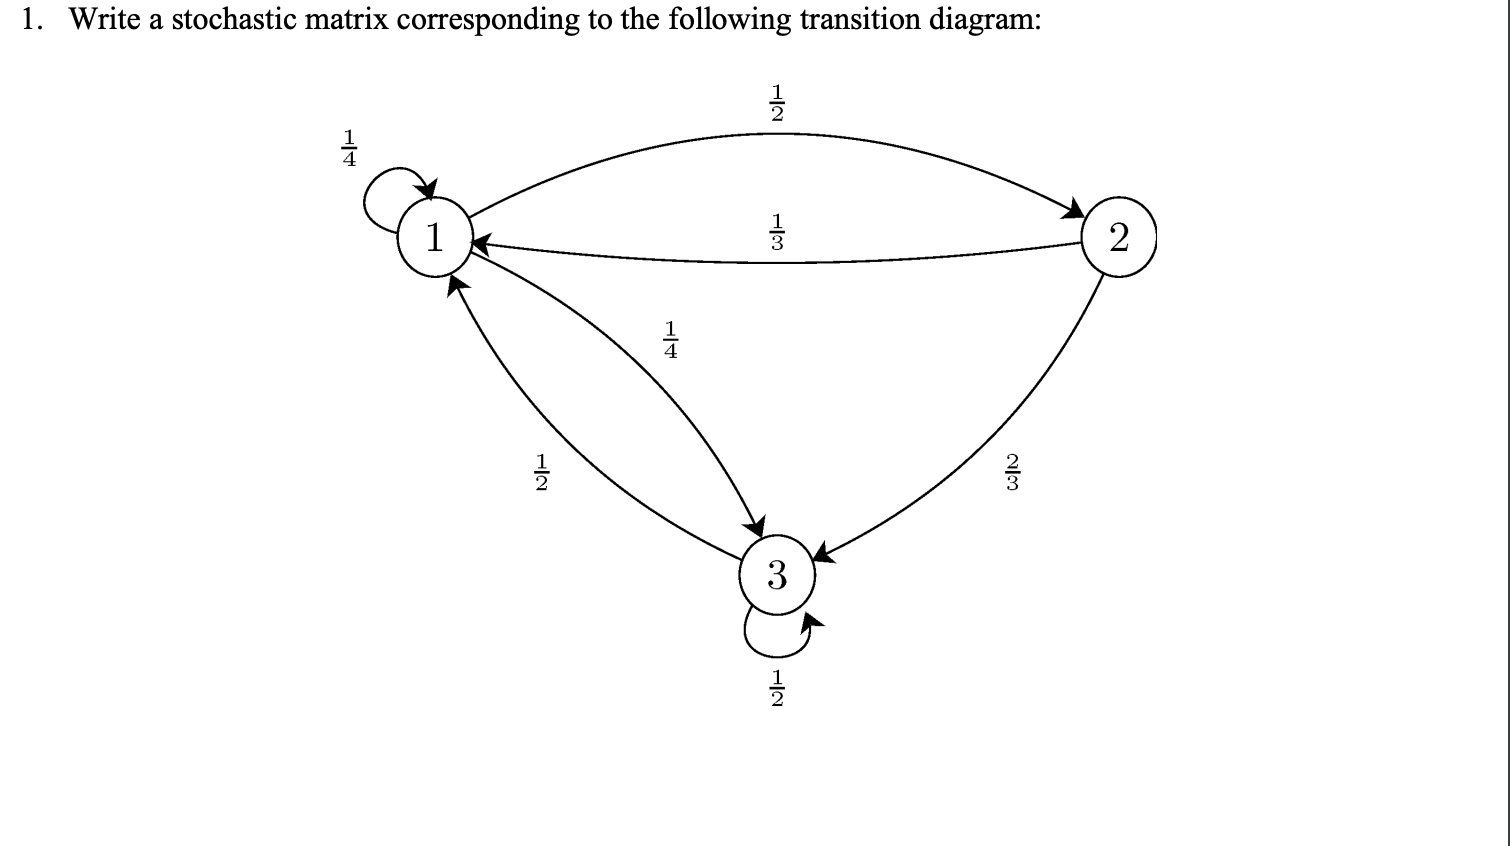 1. Write a stochastic matrix corresponding to the following transition diagram:
3
HIN
그4
